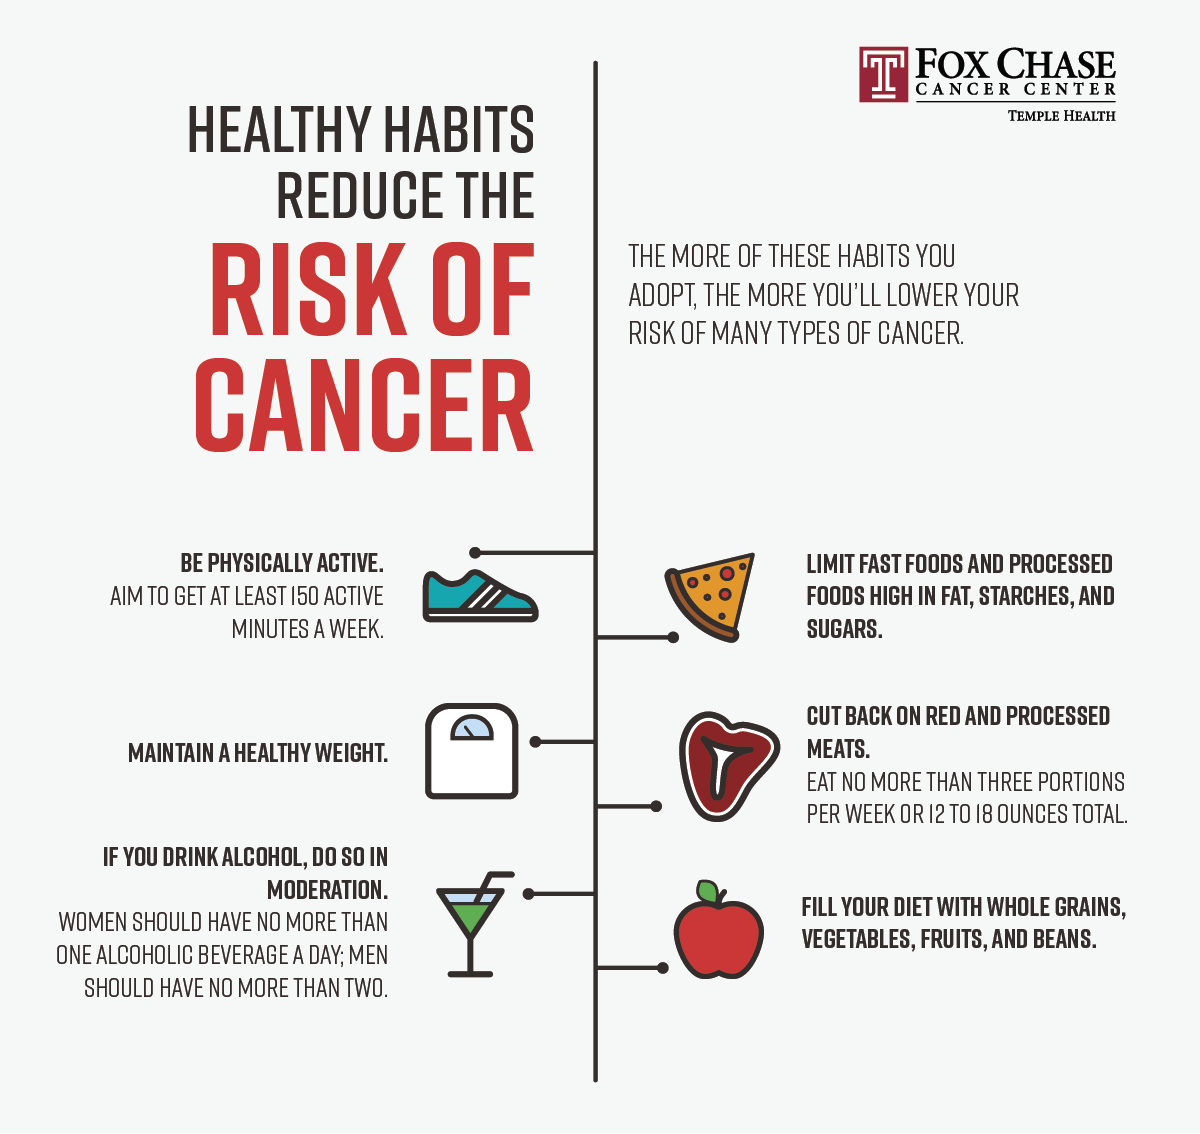 Anti-cancer habits